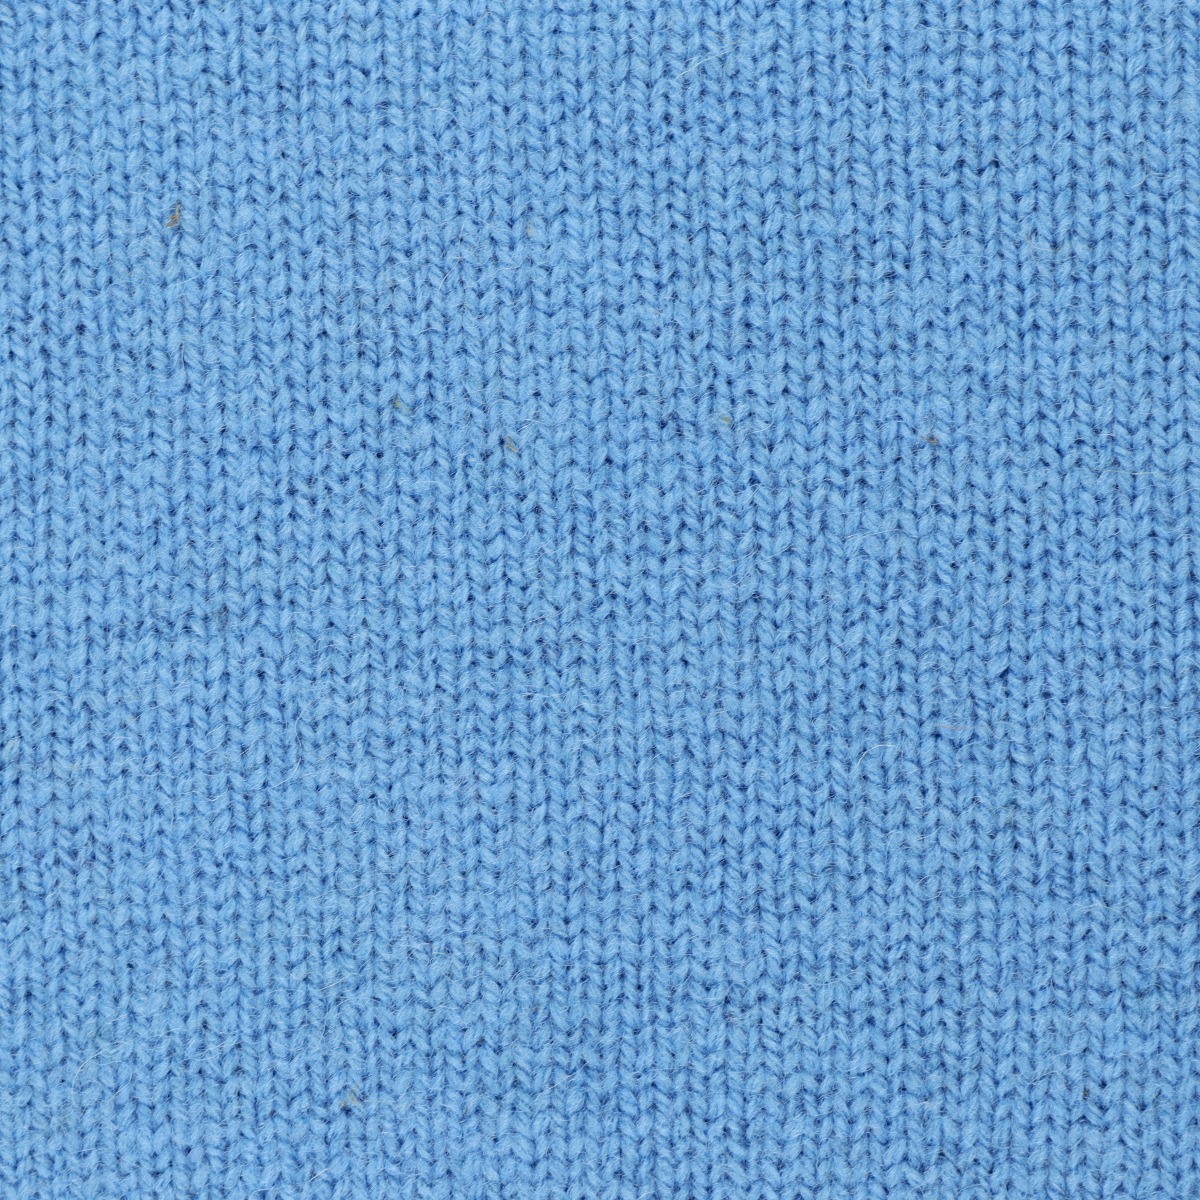 Jamiesons light blue wool crew neck sweater